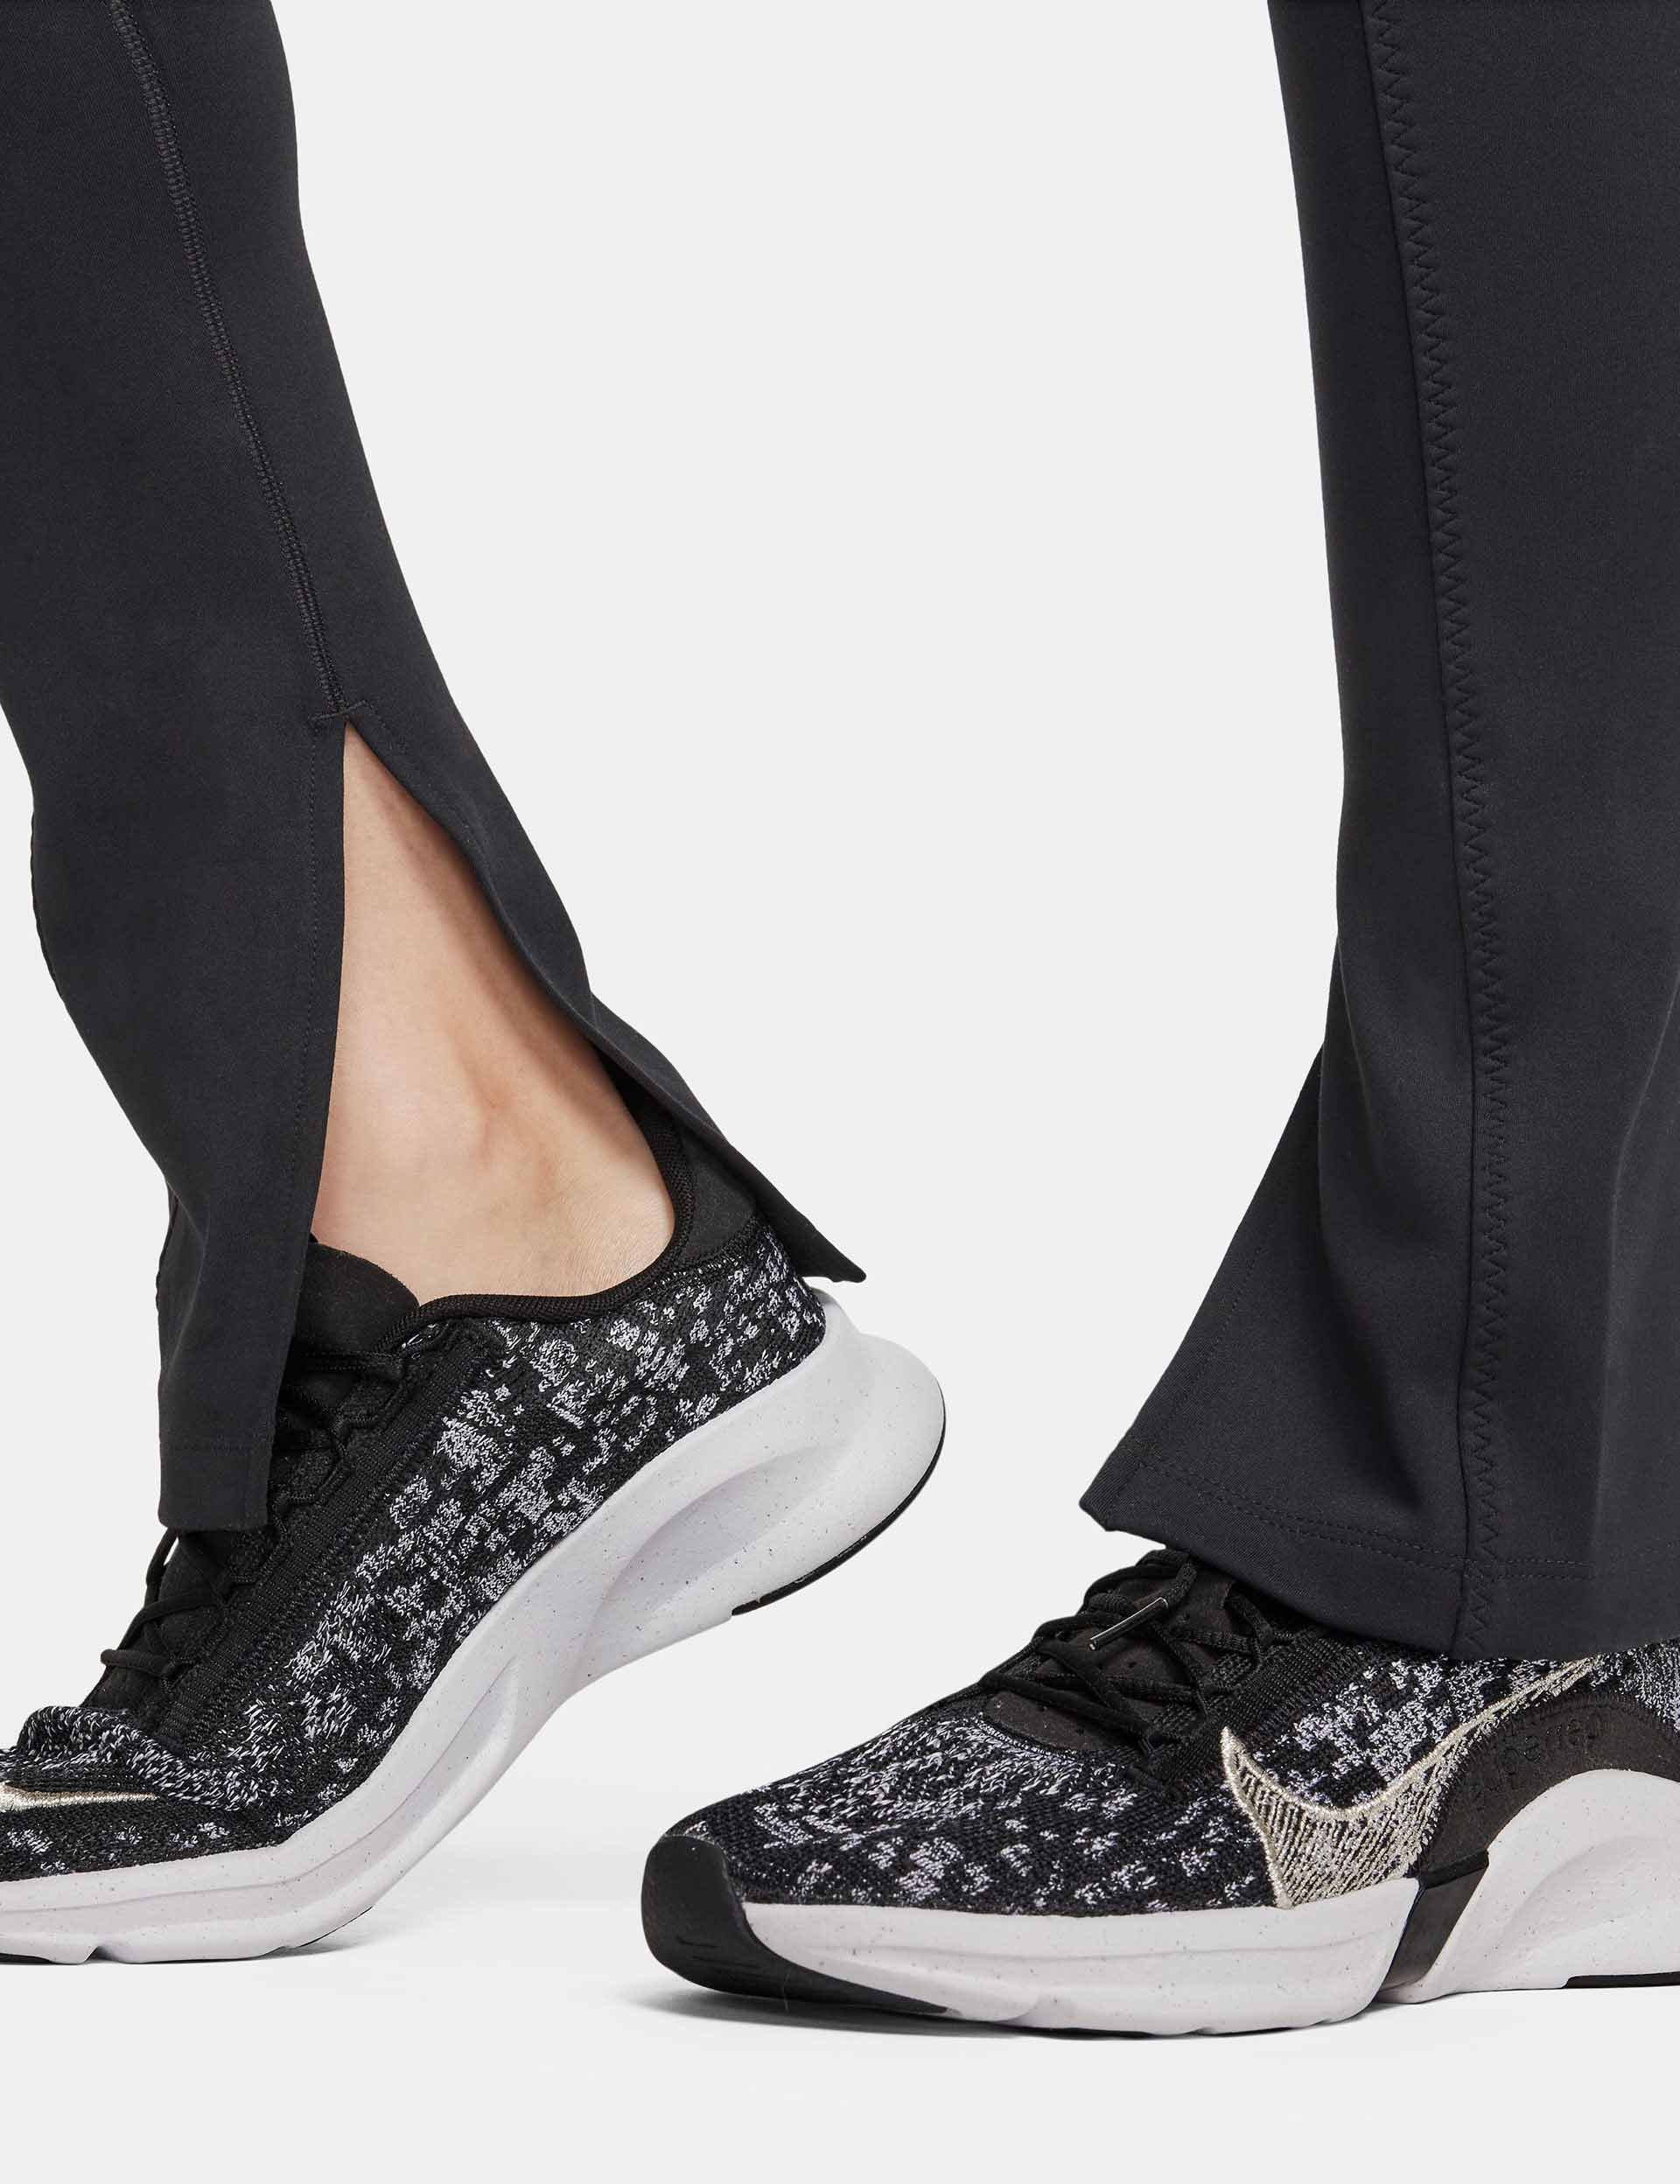 Nike, One High-Rise Leggings - Black/White